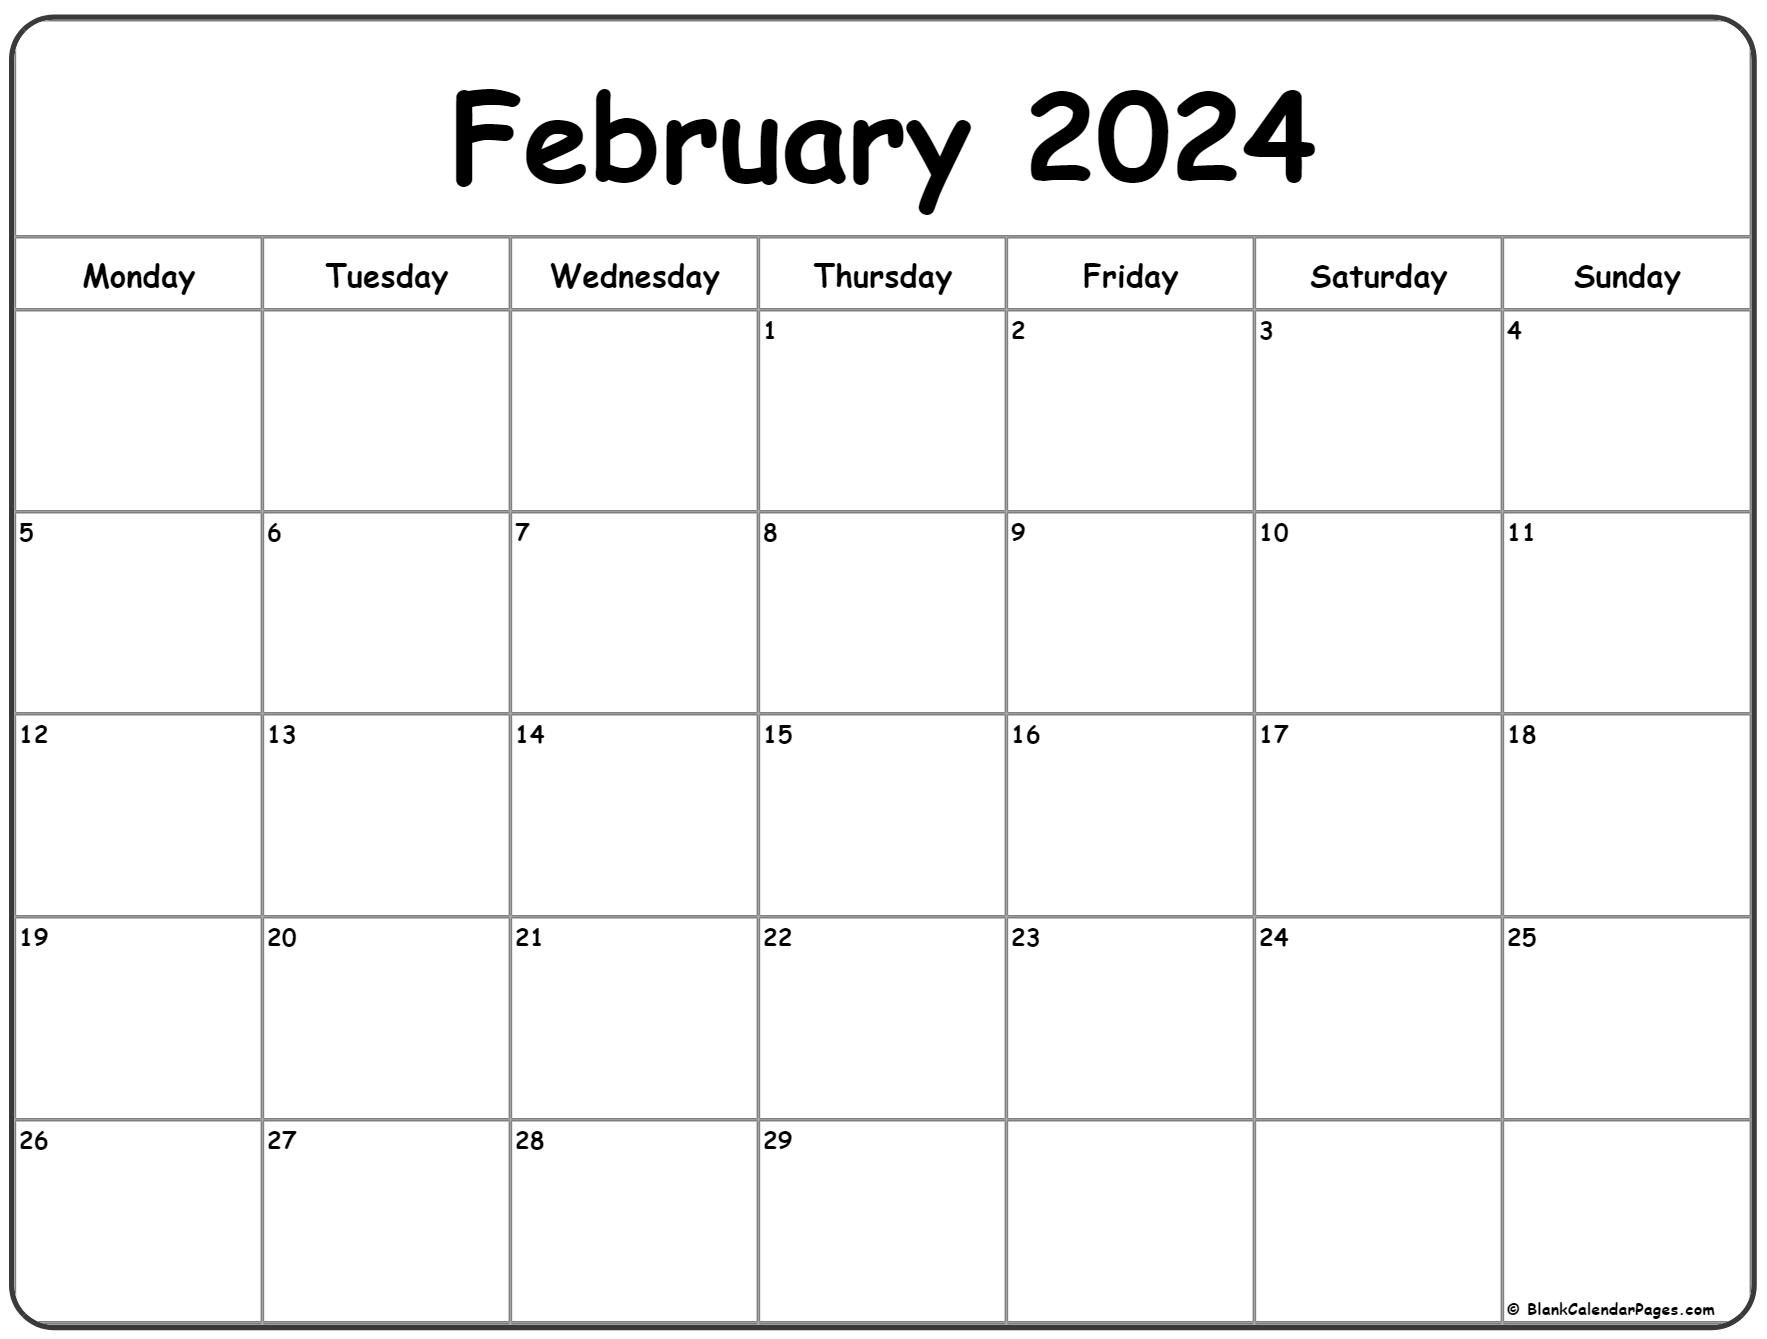 February 2022 Monday calendar. Monday to Sunday